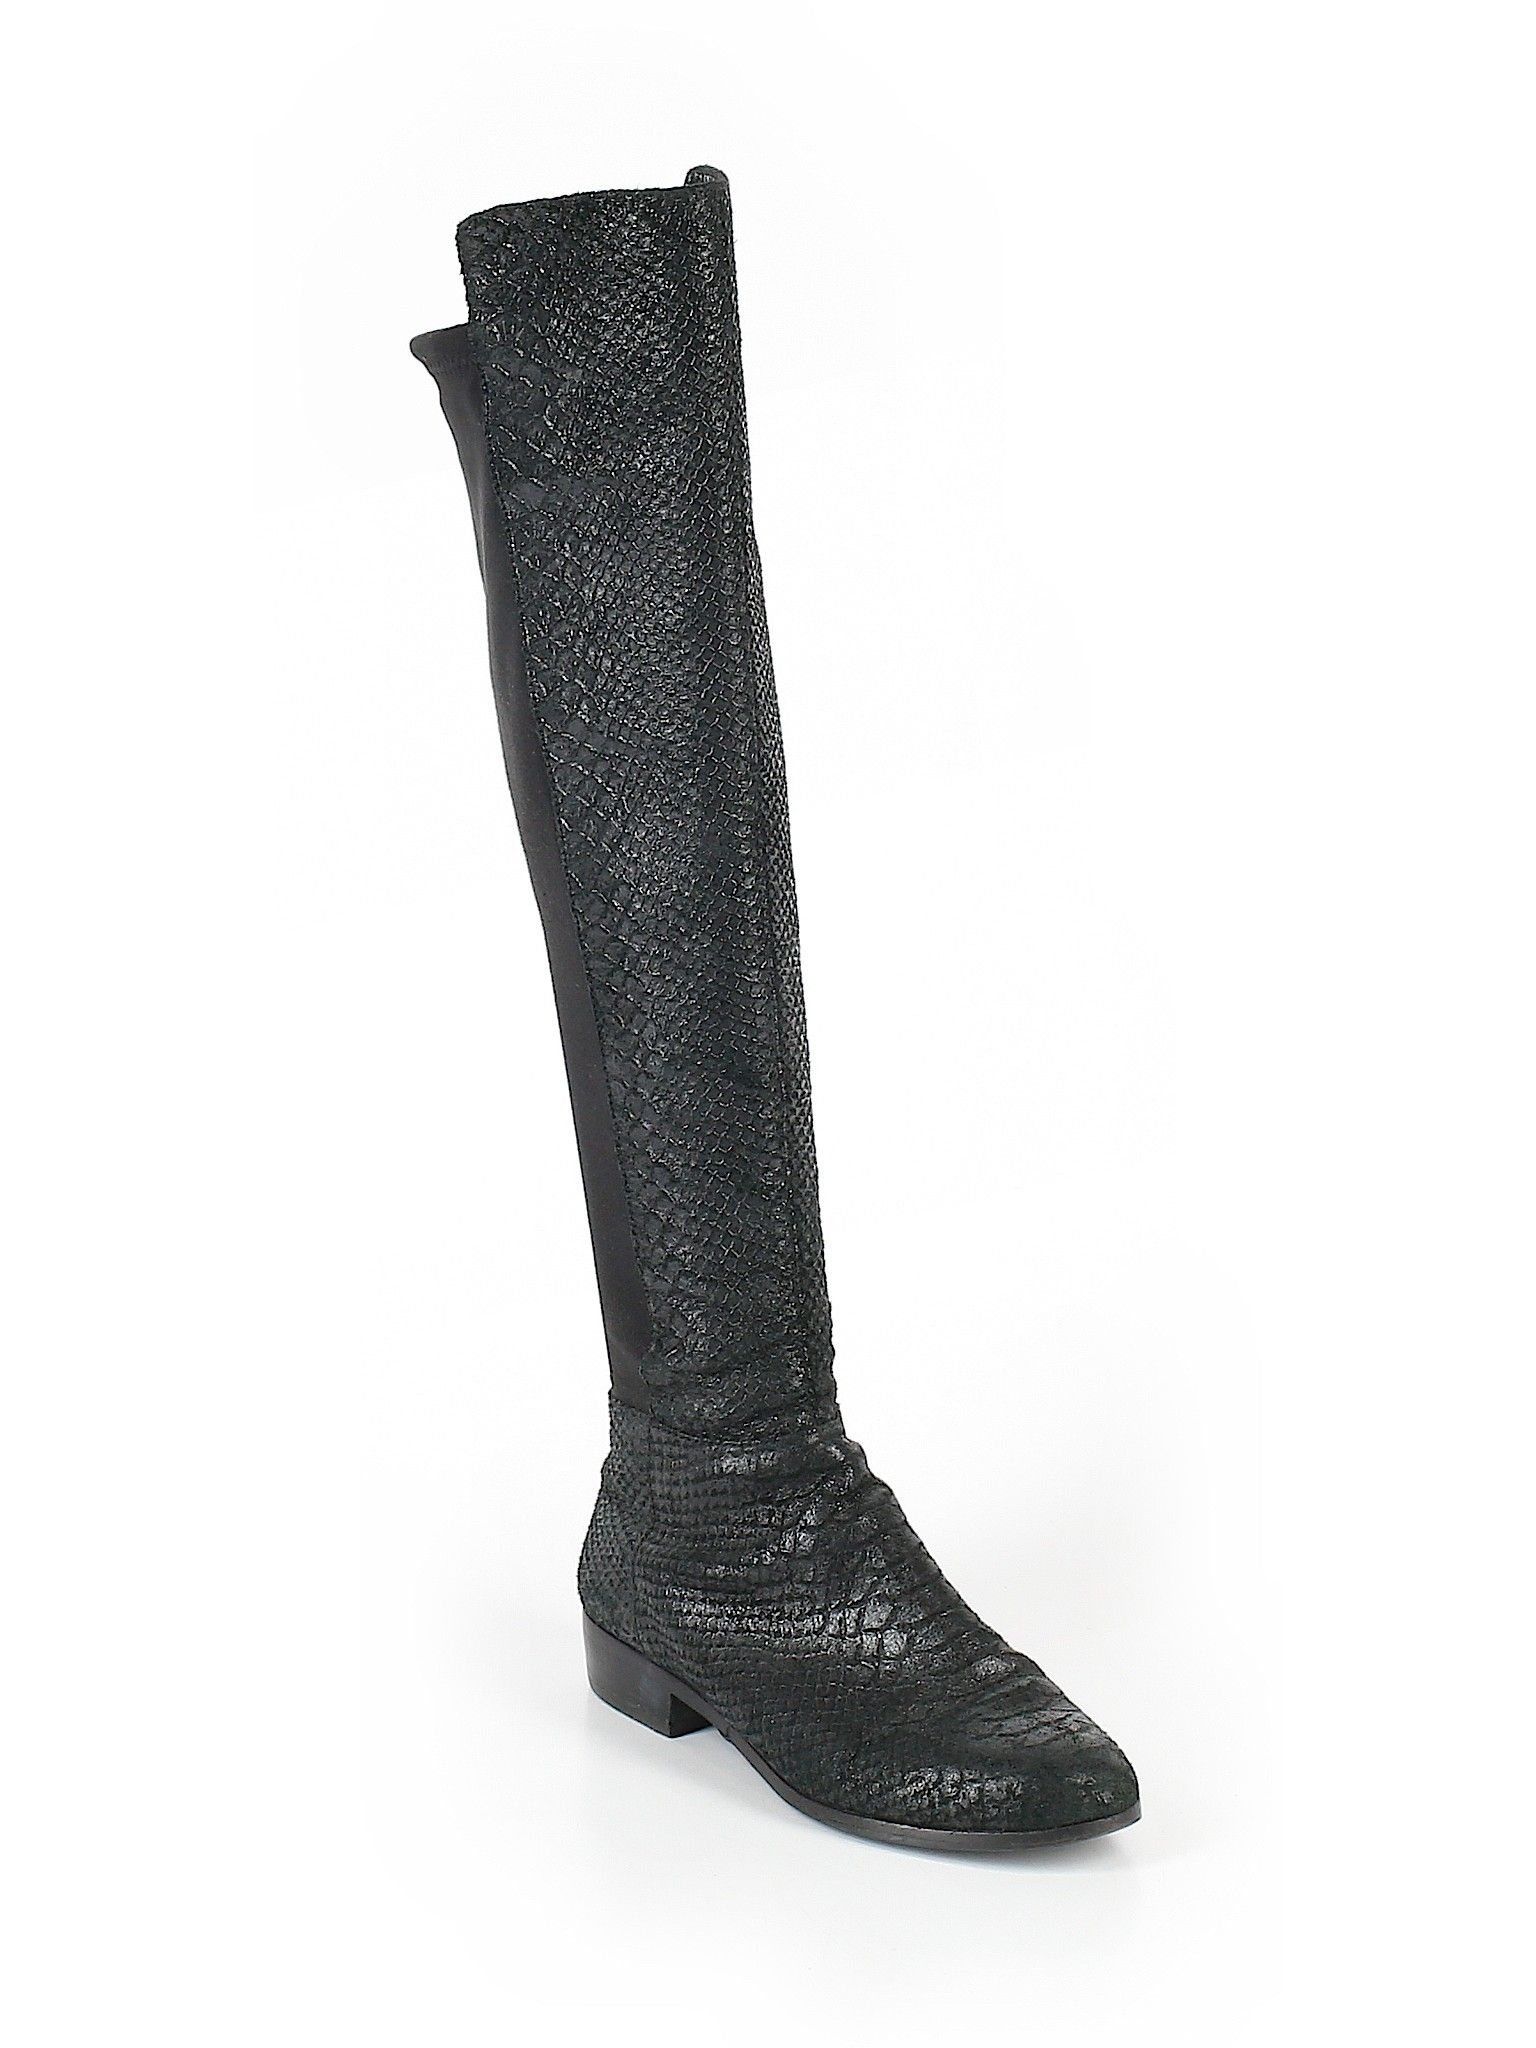 MICHAEL Michael Kors Boots Size 6: Black Women's Clothing - 43358169 | thredUP